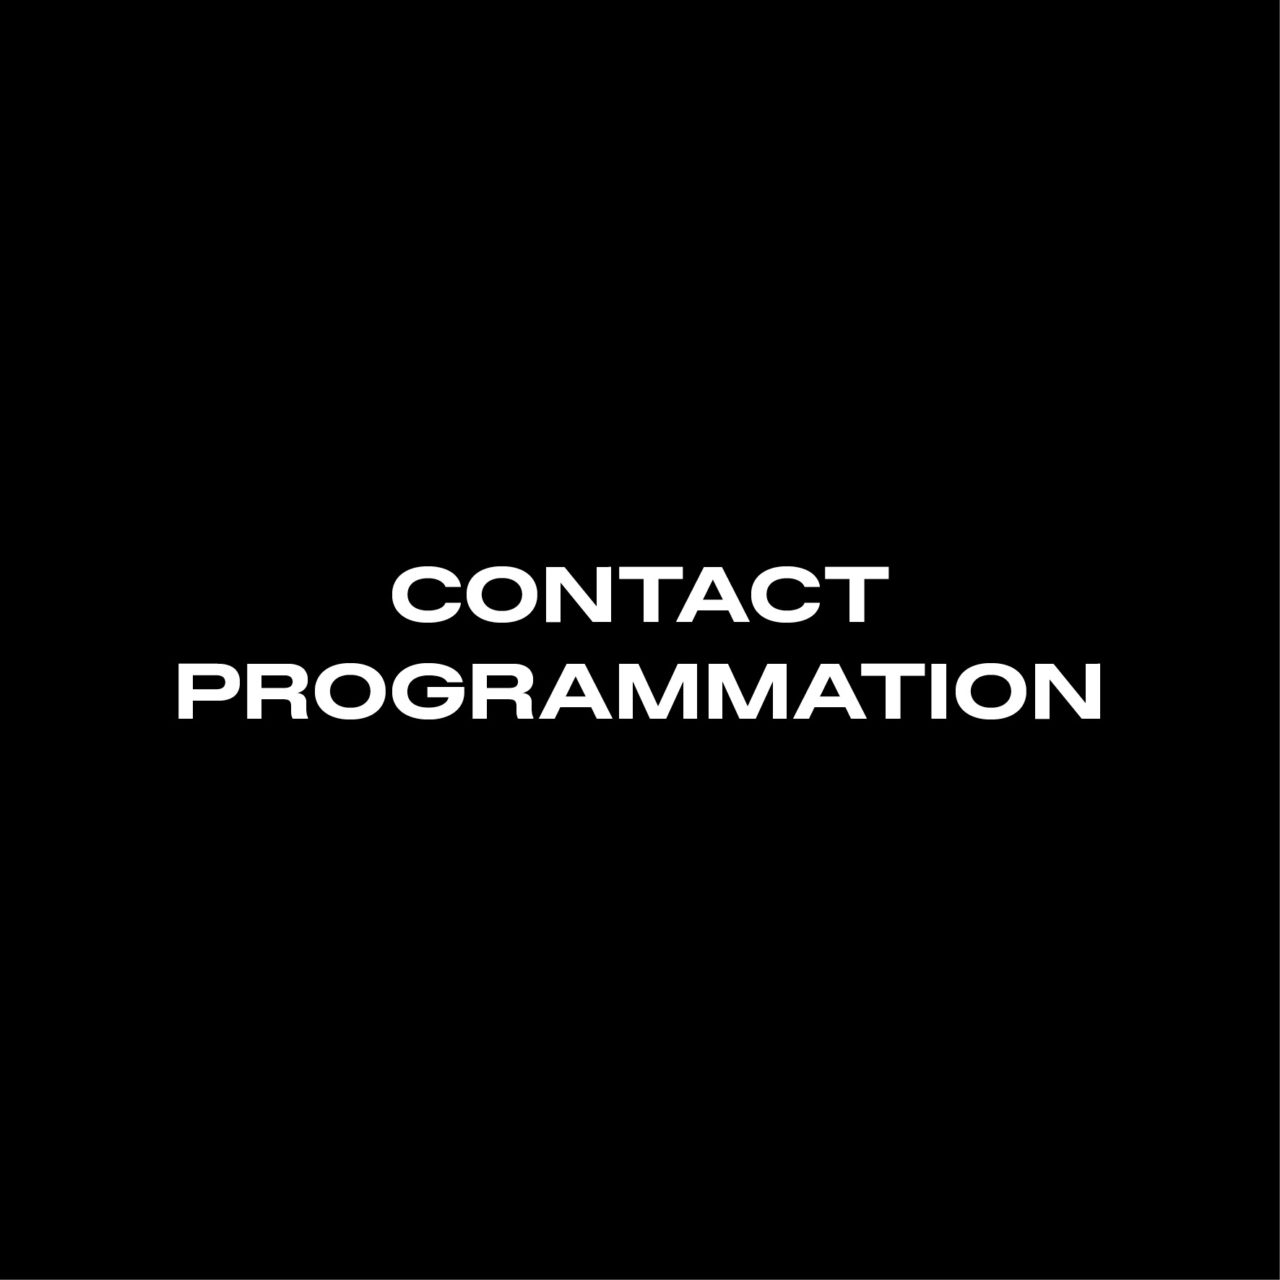 Contact programmation